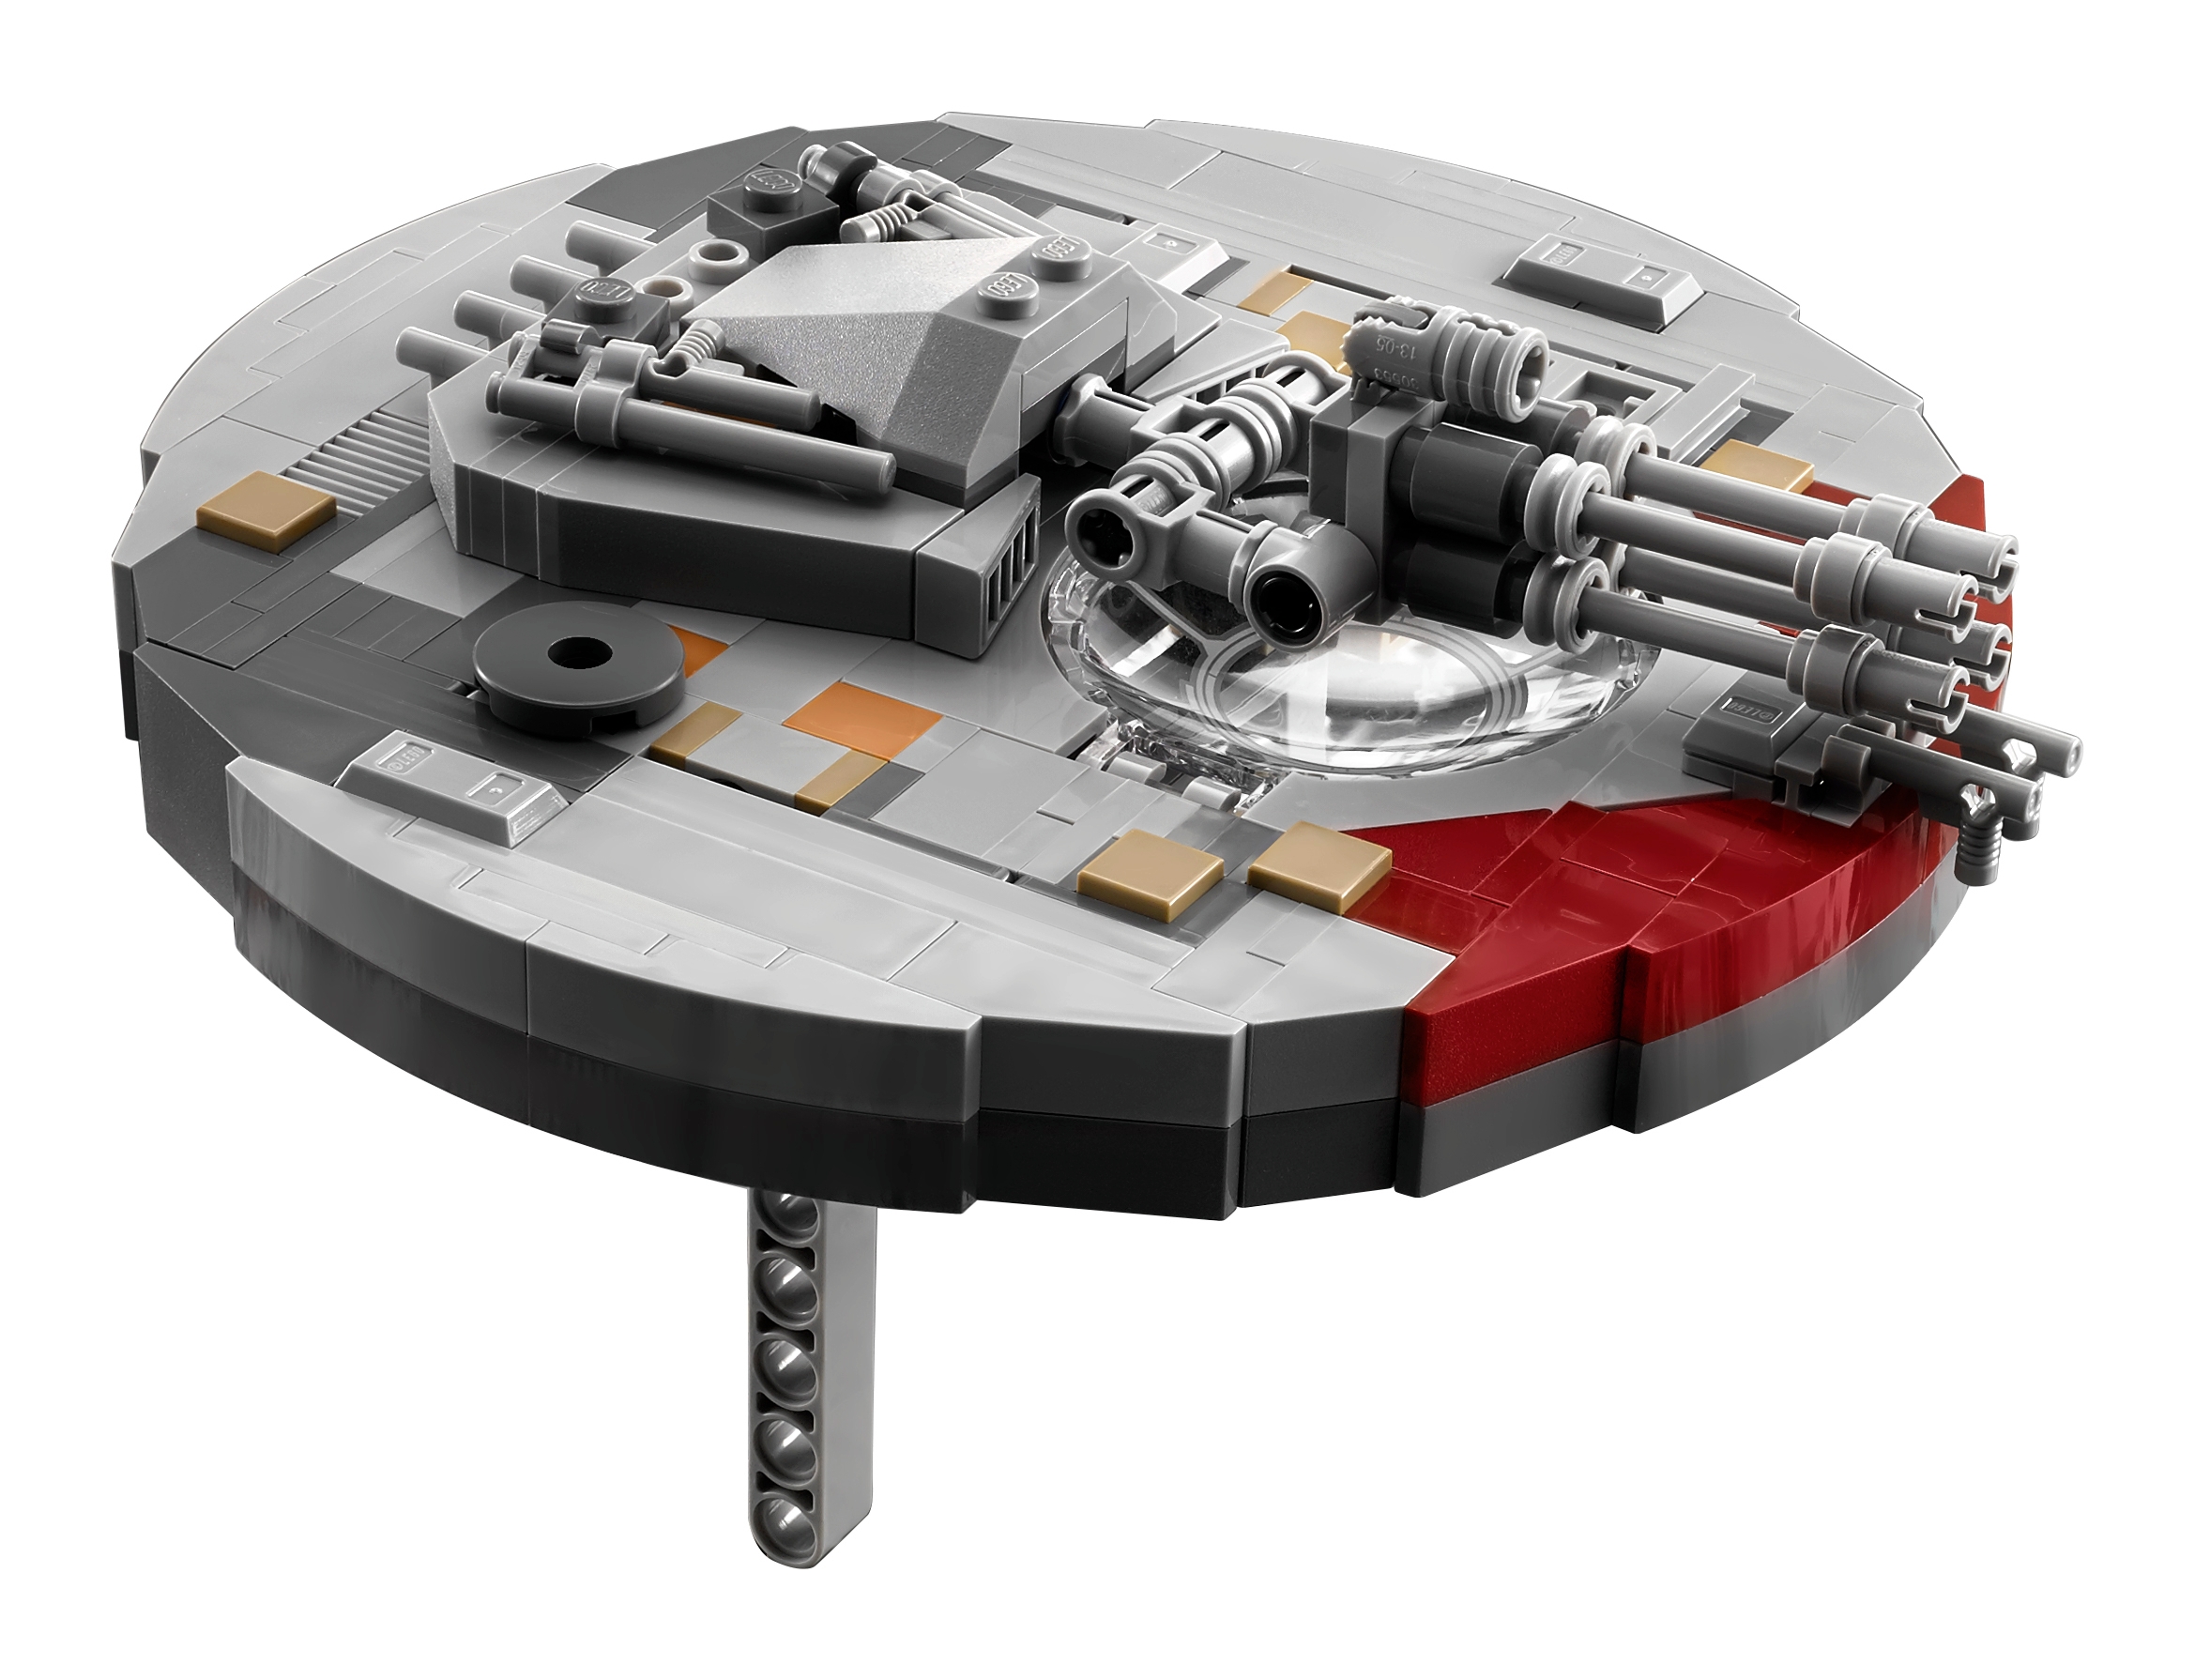 LEGO STAR WARS 75192 Millennium Falcon - Speed Build for Collecrors -  Biggest Lego Set Ever 